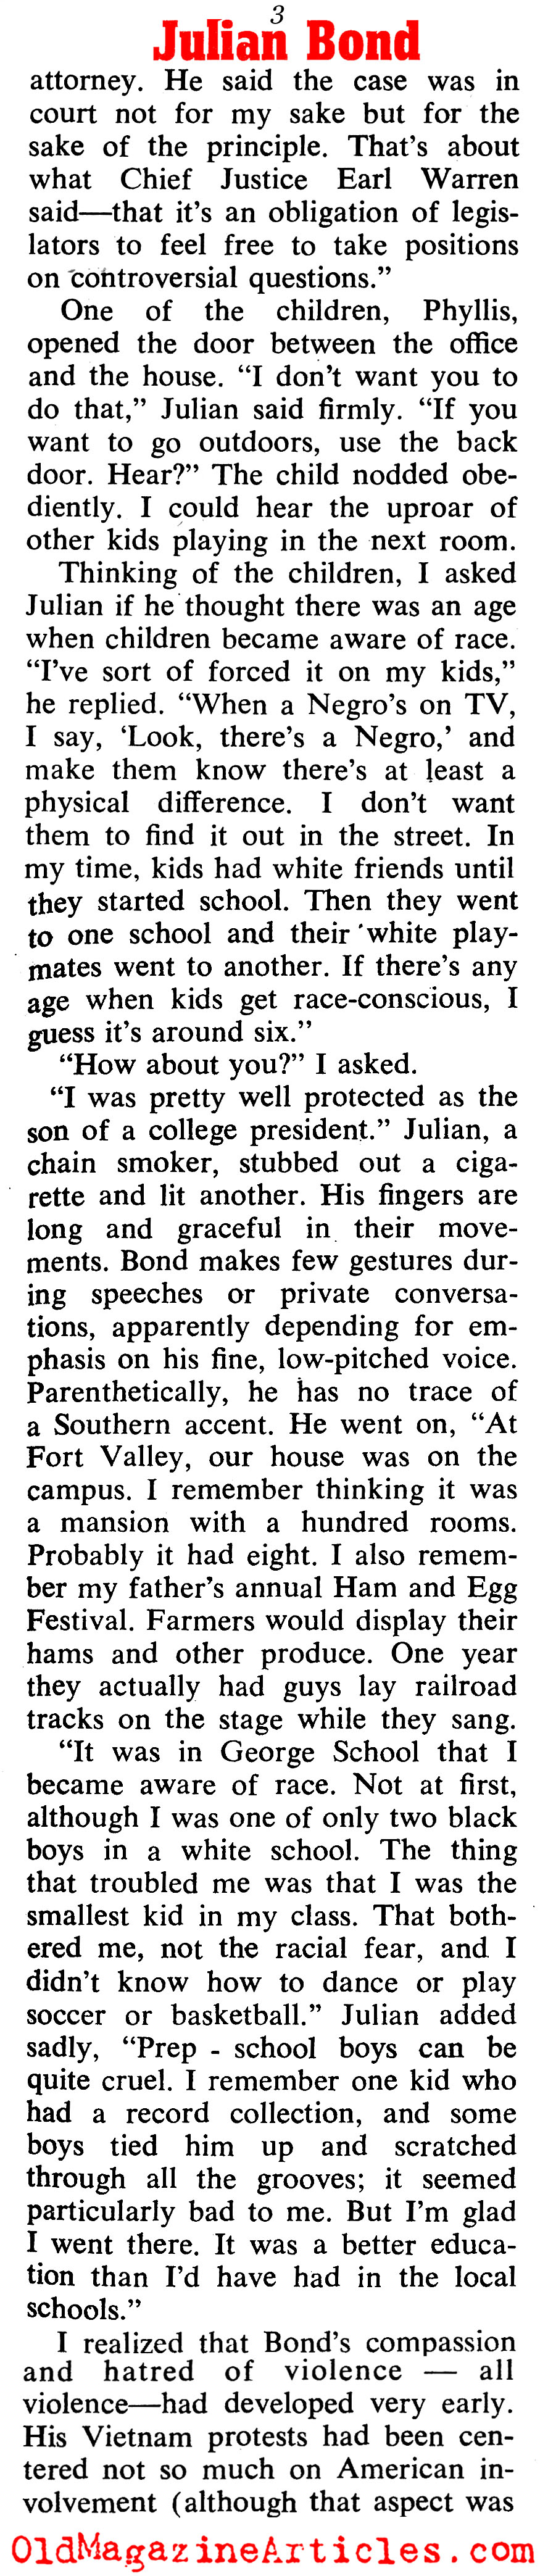 Julian Bond (Coronet Magazine, 1970)